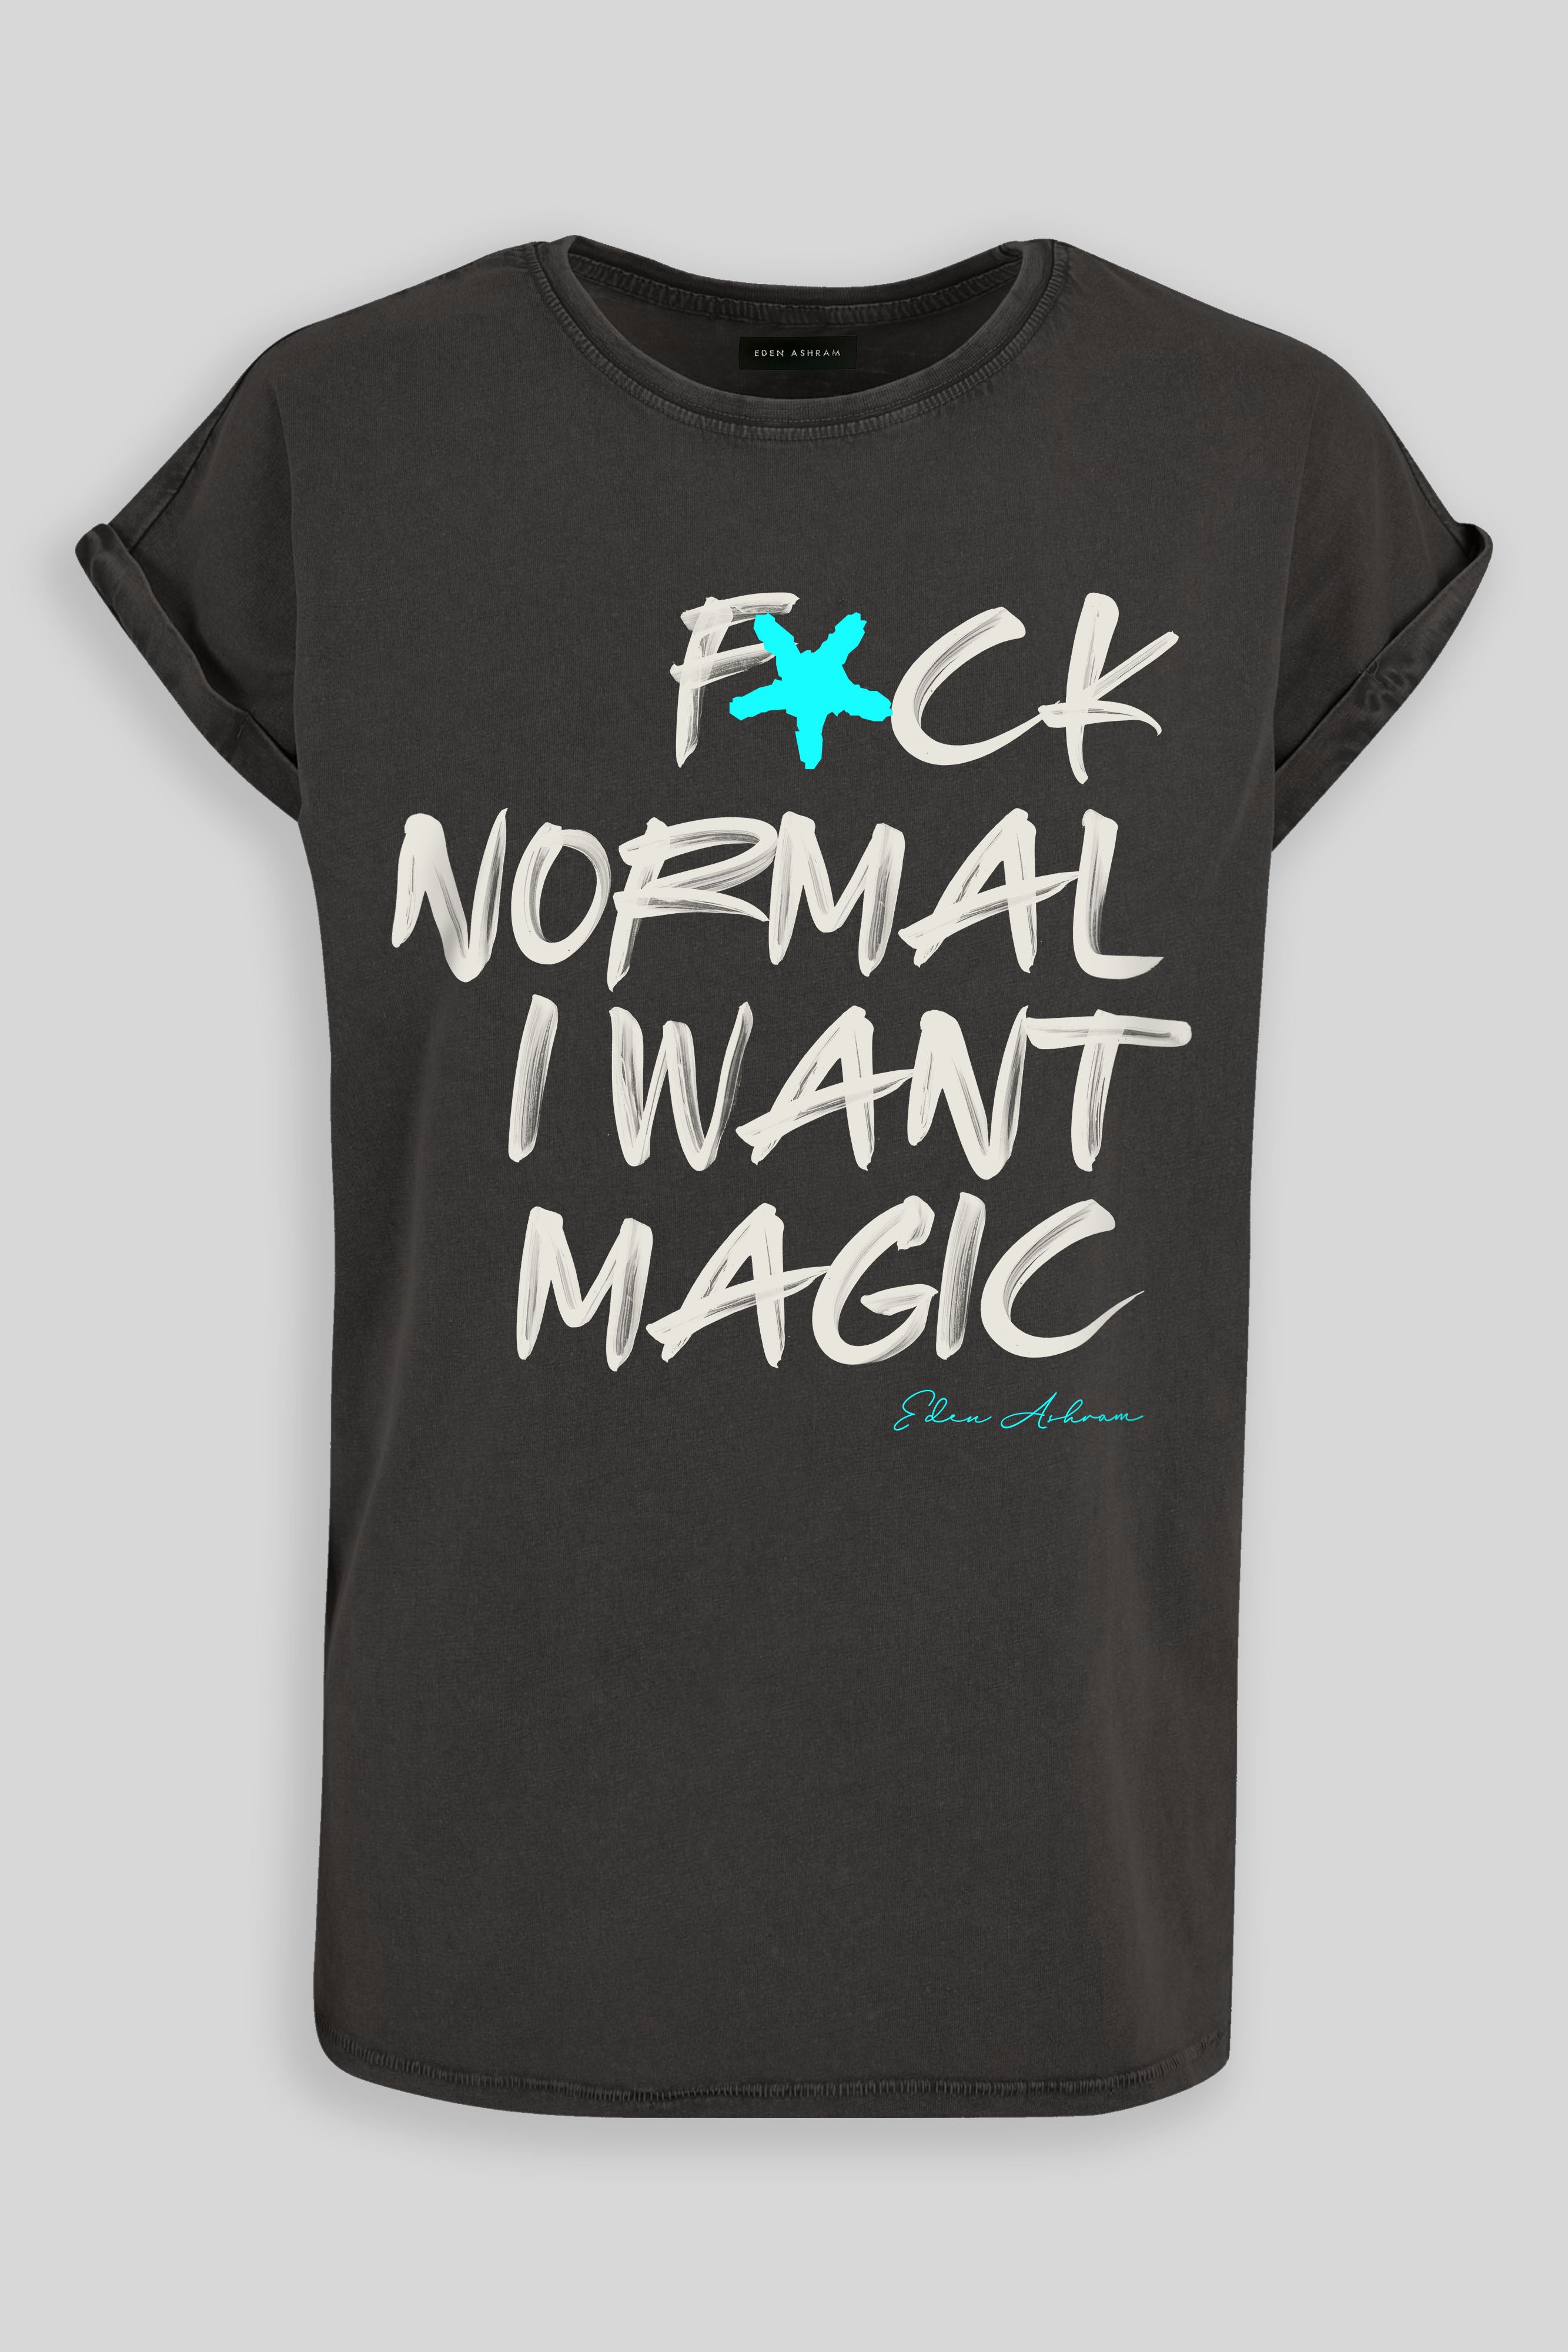 EDEN ASHRAM F*ck Normal I Want Magic Premium Relaxed Boyfriend T-Shirt Acid Wash Black